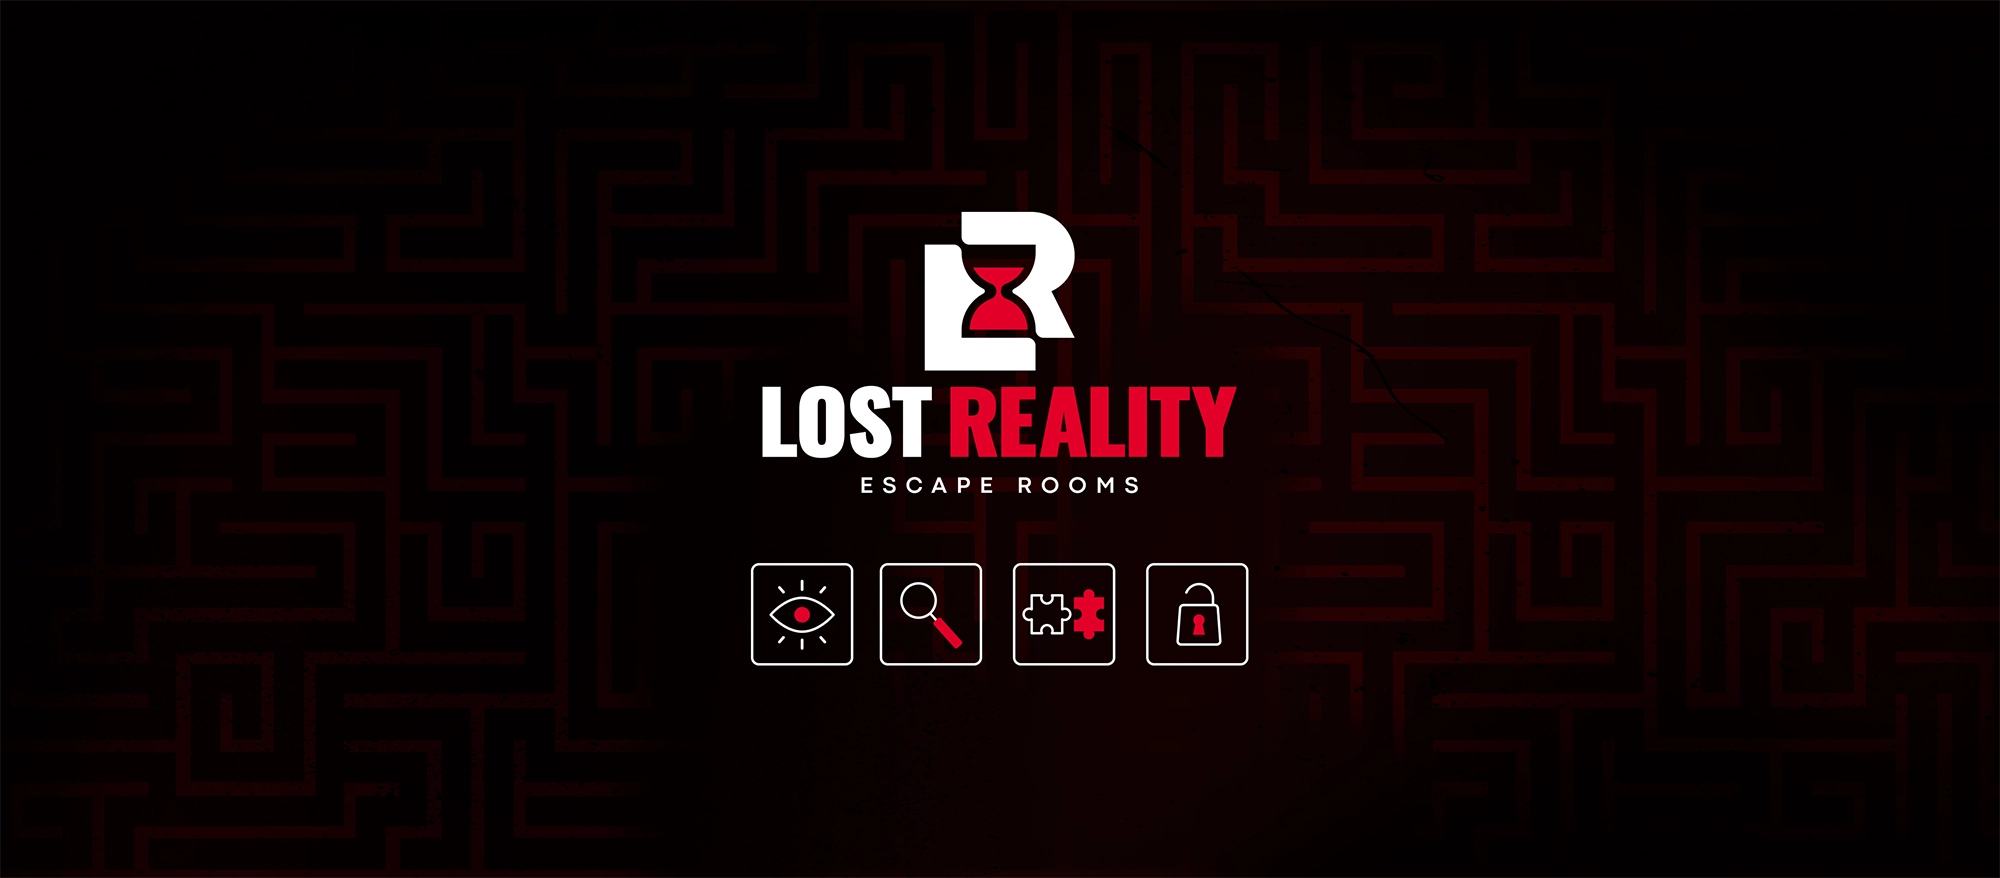 Lost Reality Escape Room